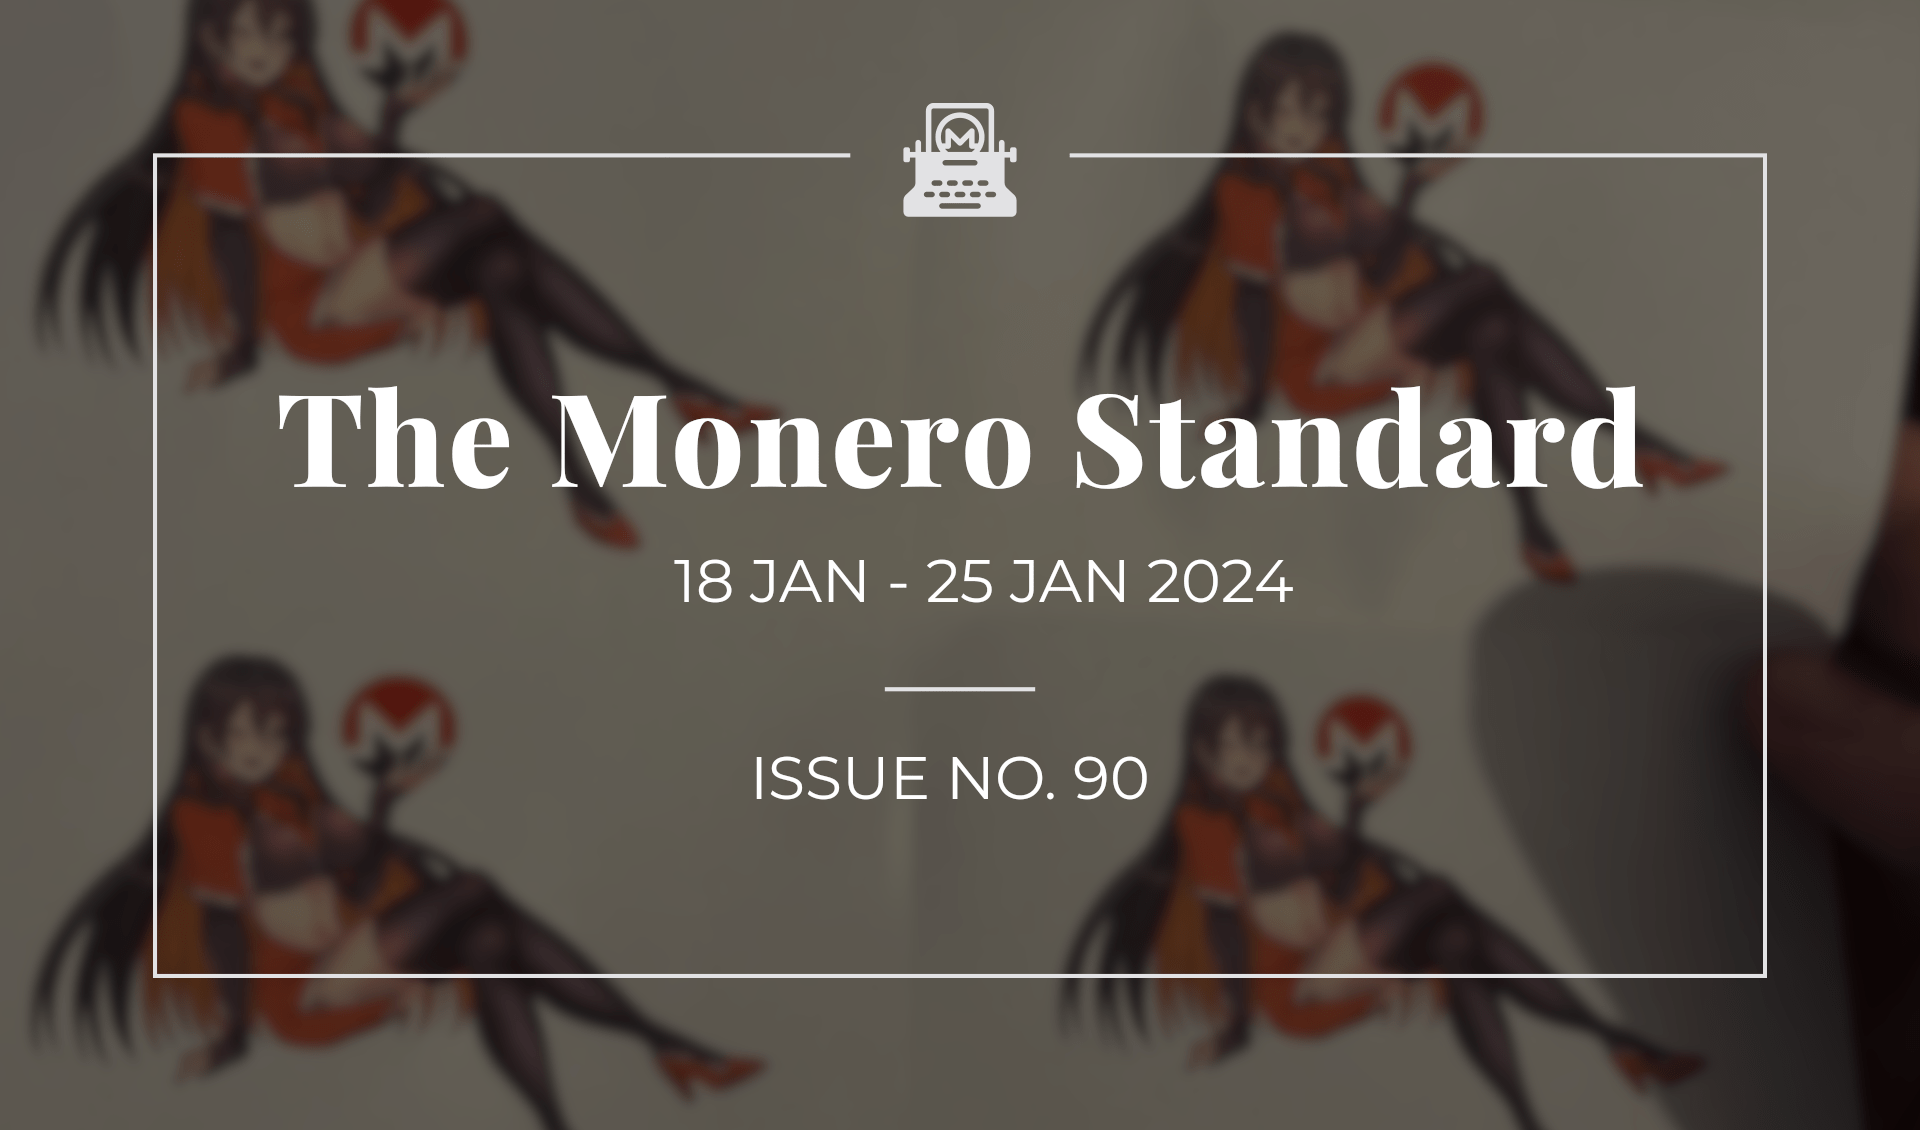 The Monero Standard #90: 18 Jan 2023 - 25 Jan 2024